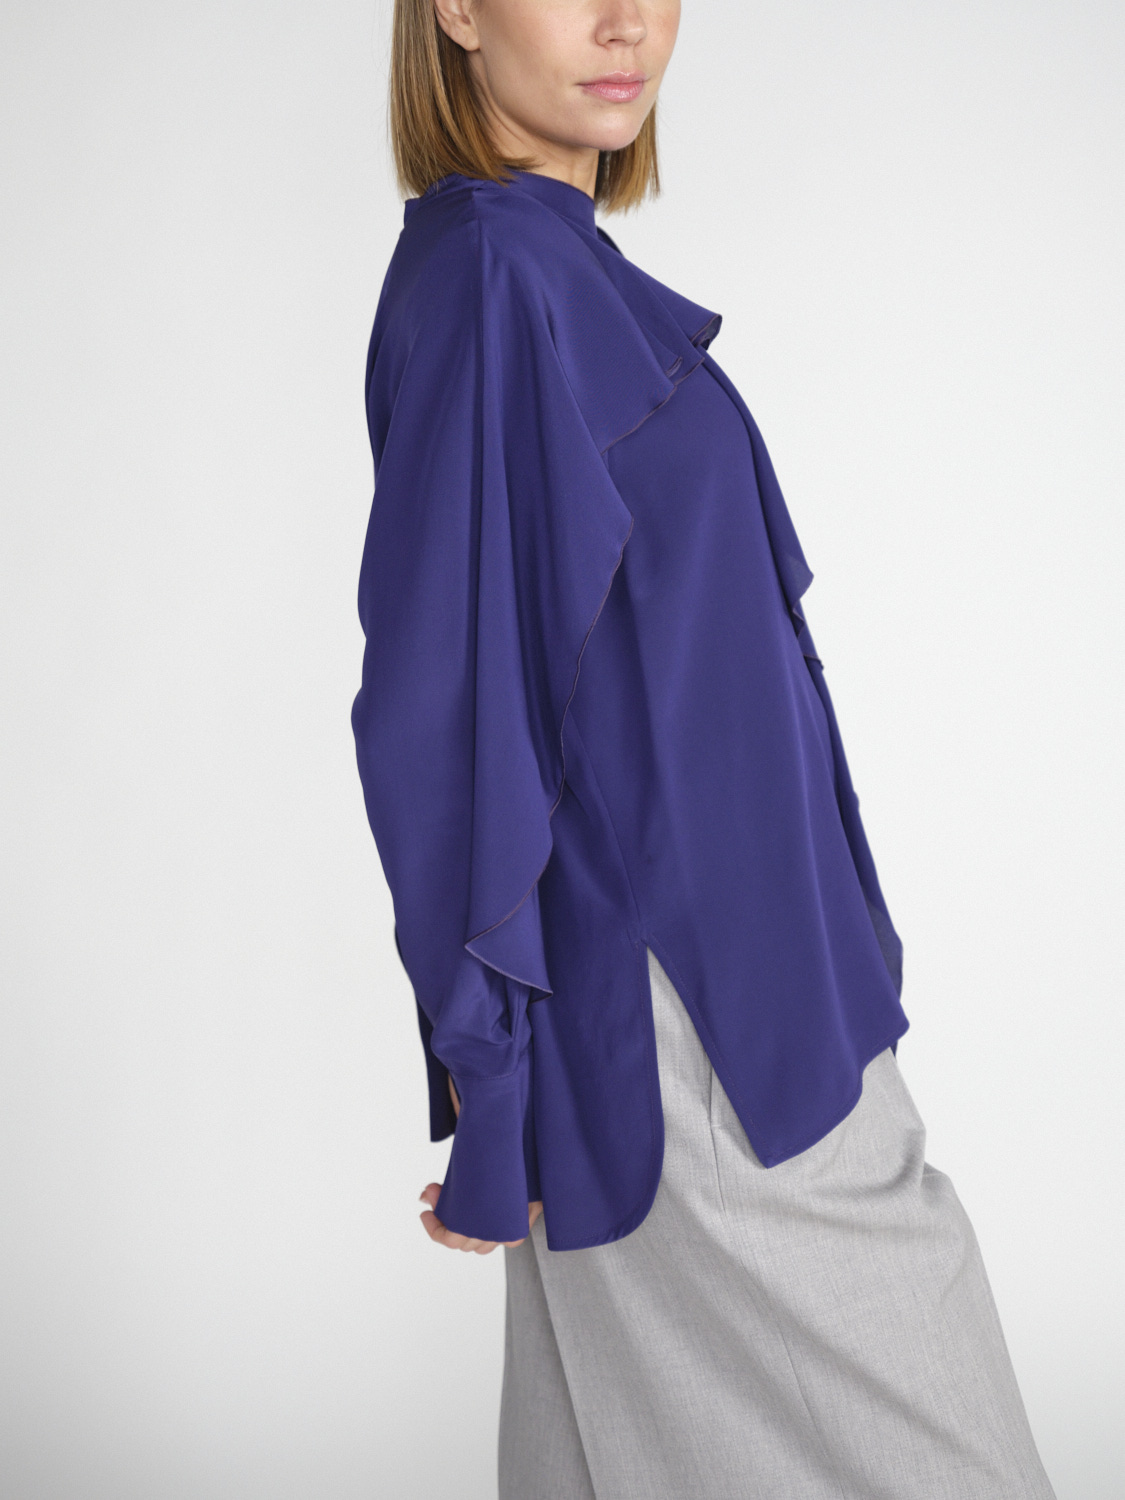 Victoria Beckham Romantic - Blusa de crêpe de seda con detalles de volantes   morado 36